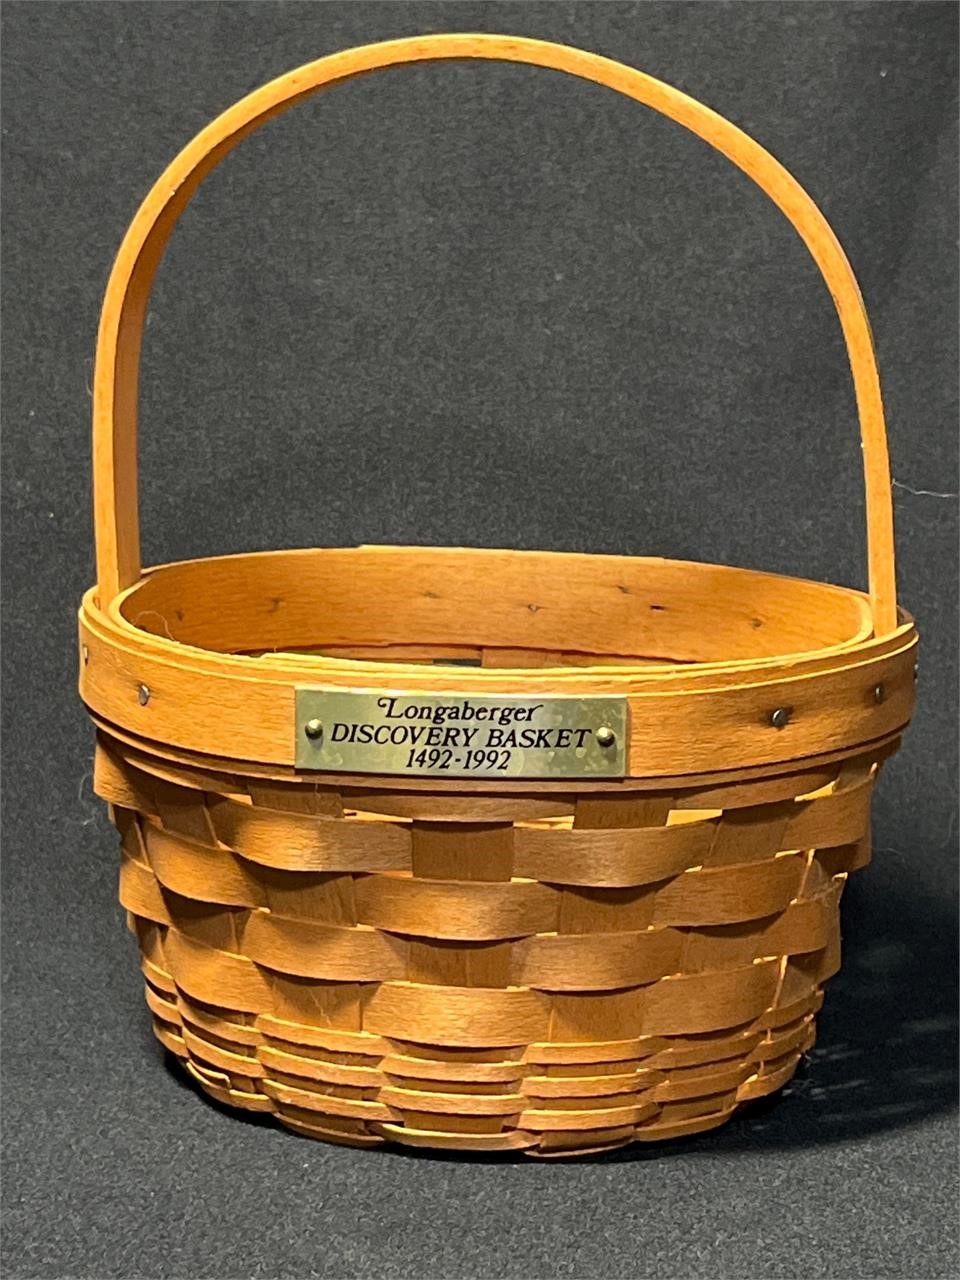 Longaberger Discovery Basket. 1492-1992